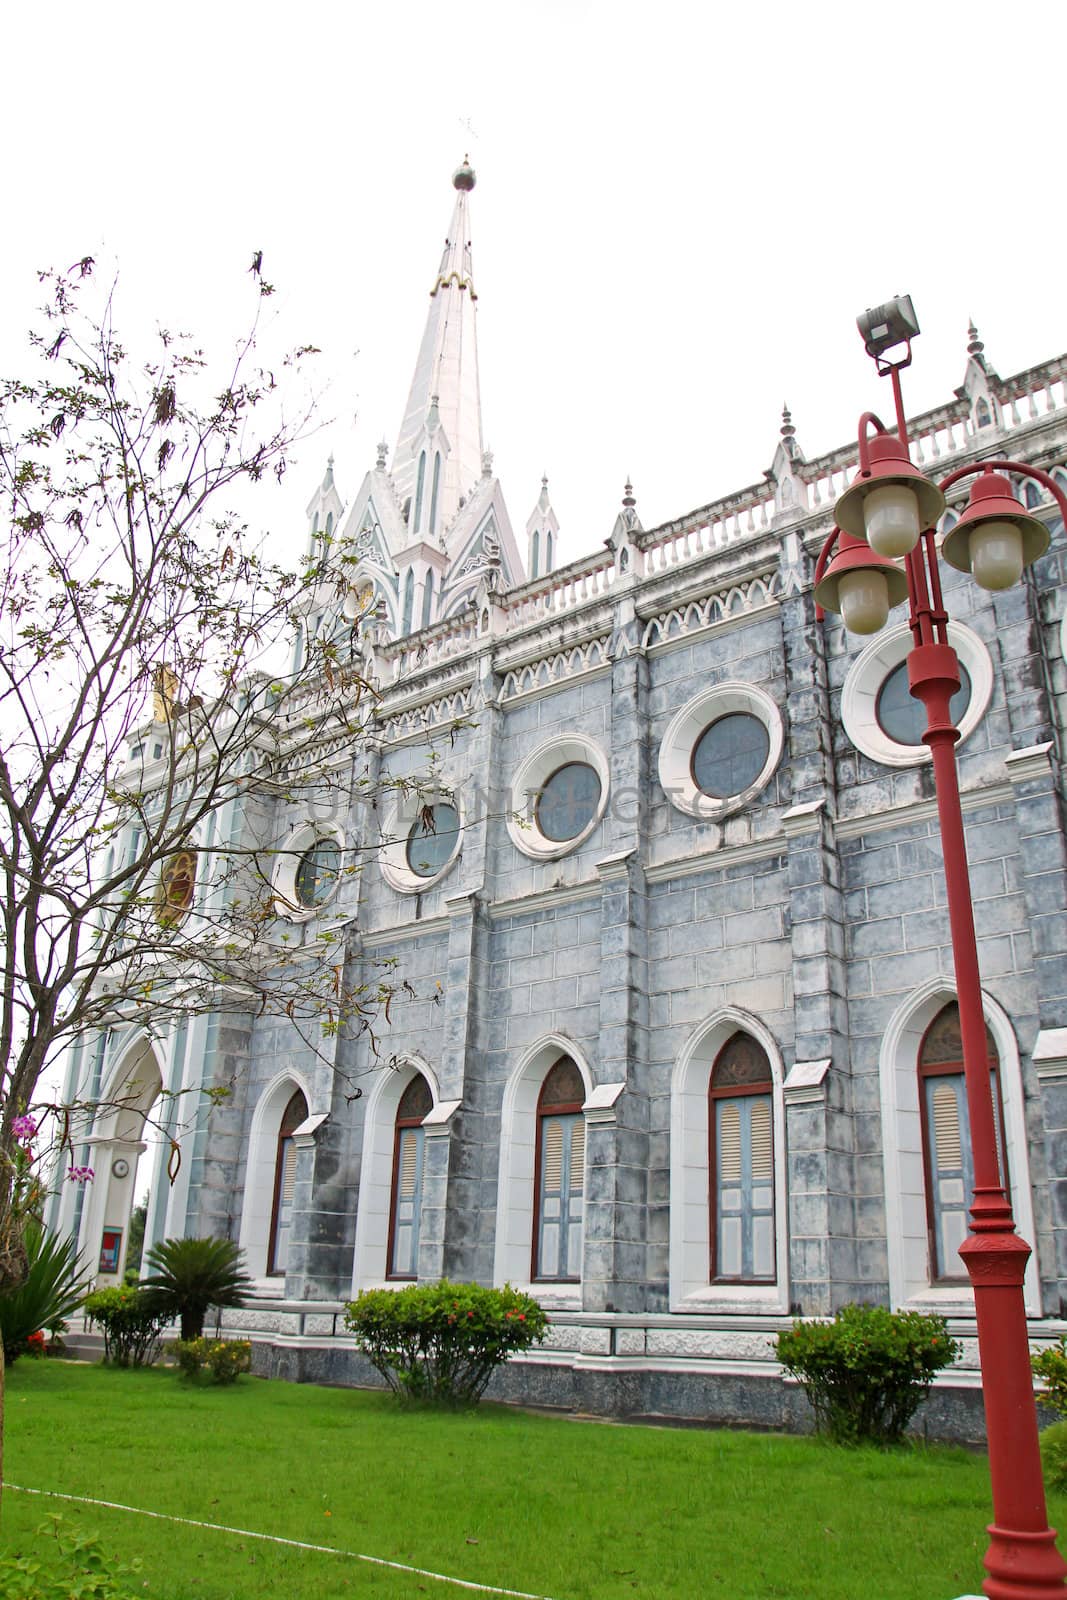 White Cathedral church, Samut Songkhram, Thailand  by nuchylee